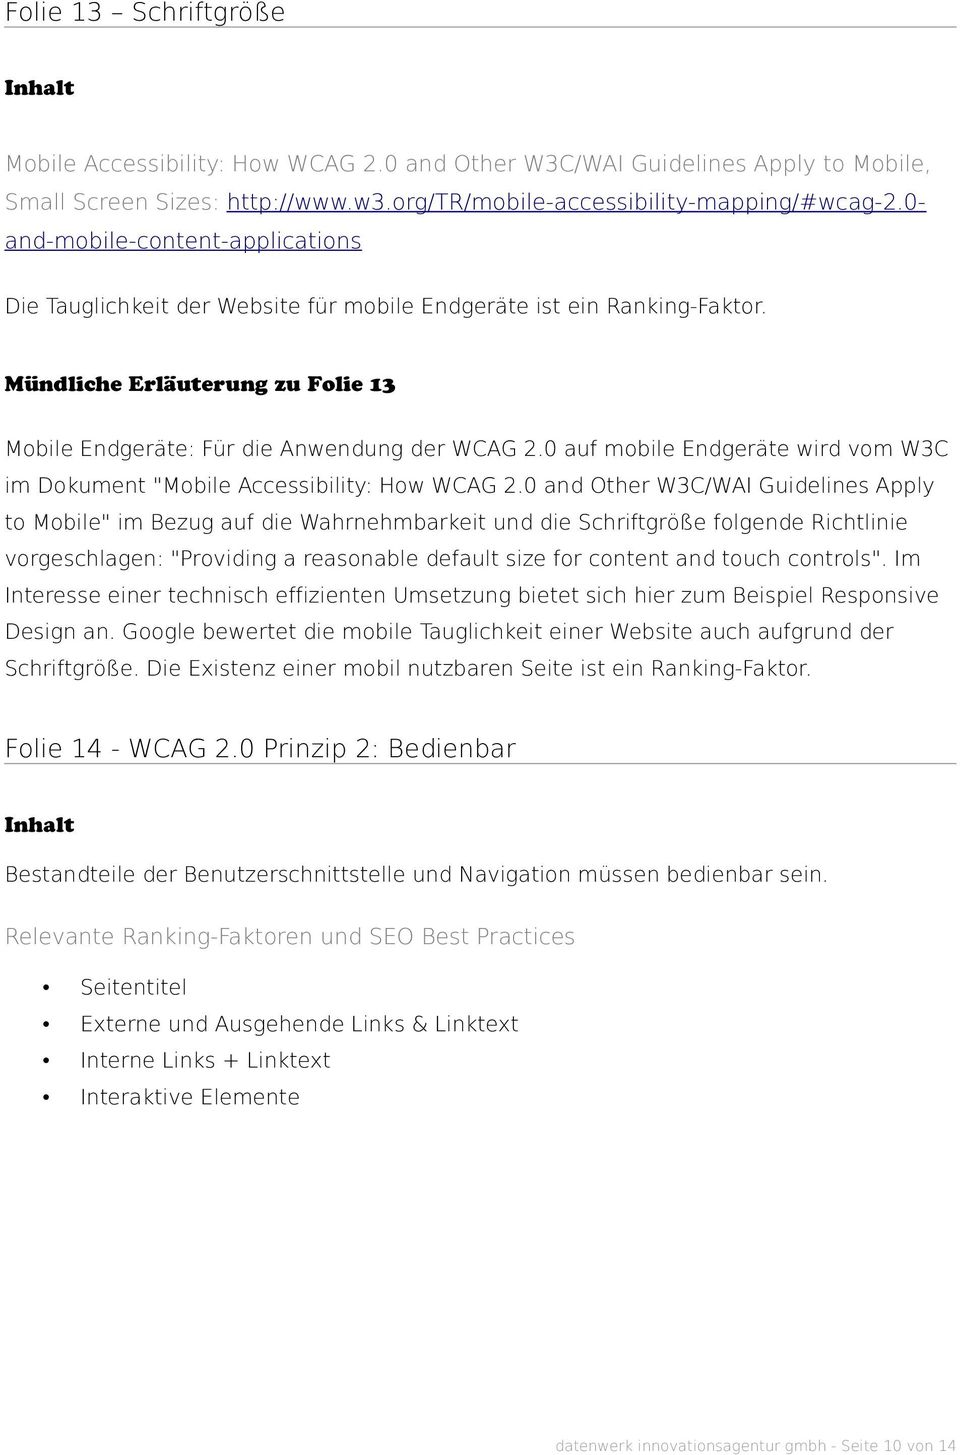 0 auf mobile Endgeräte wird vom W3C im Dokument "Mobile Accessibility: How WCAG 2.